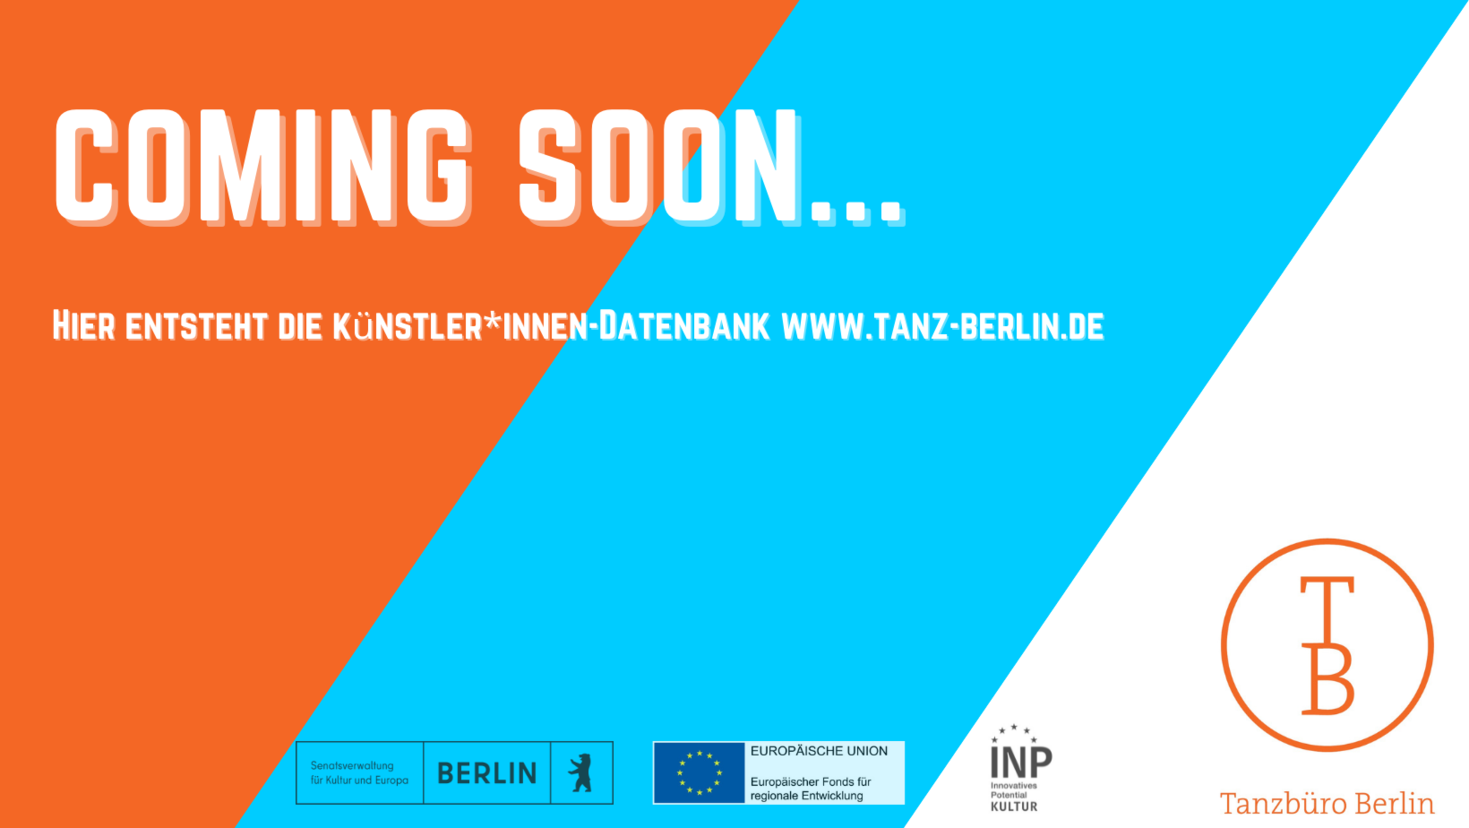 Coming Soon: Hier entsteht die Künstler*innen-Datenbank www.tanz-berlin.de